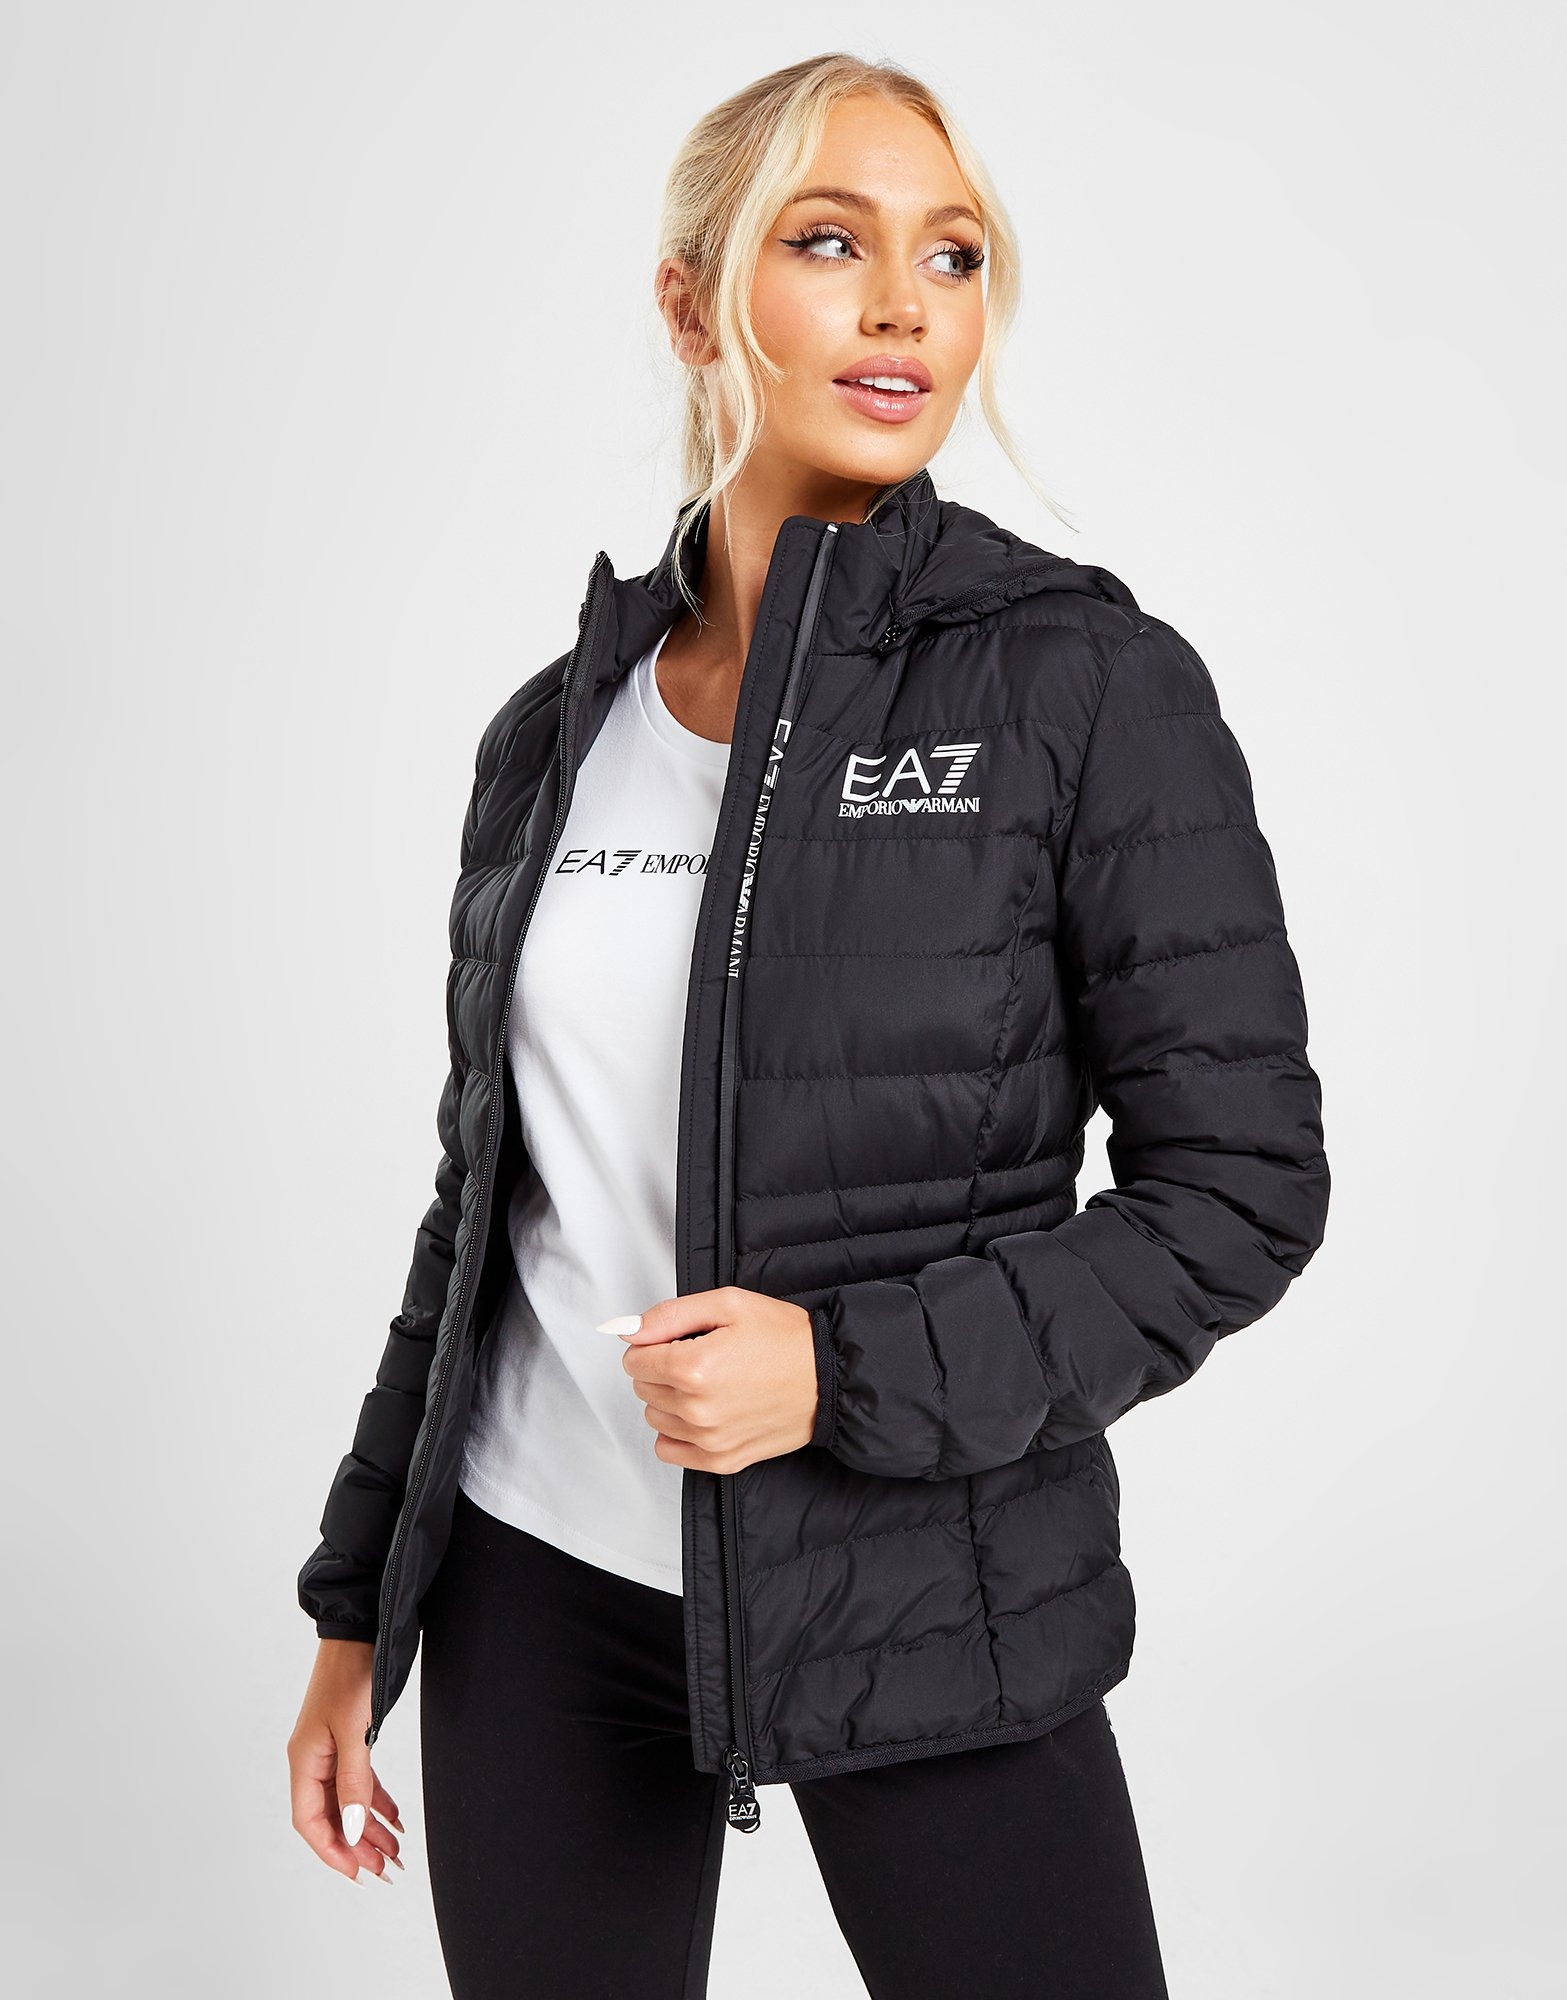 Zwart Emporio EA7 Logo Zip Jacket - Sports